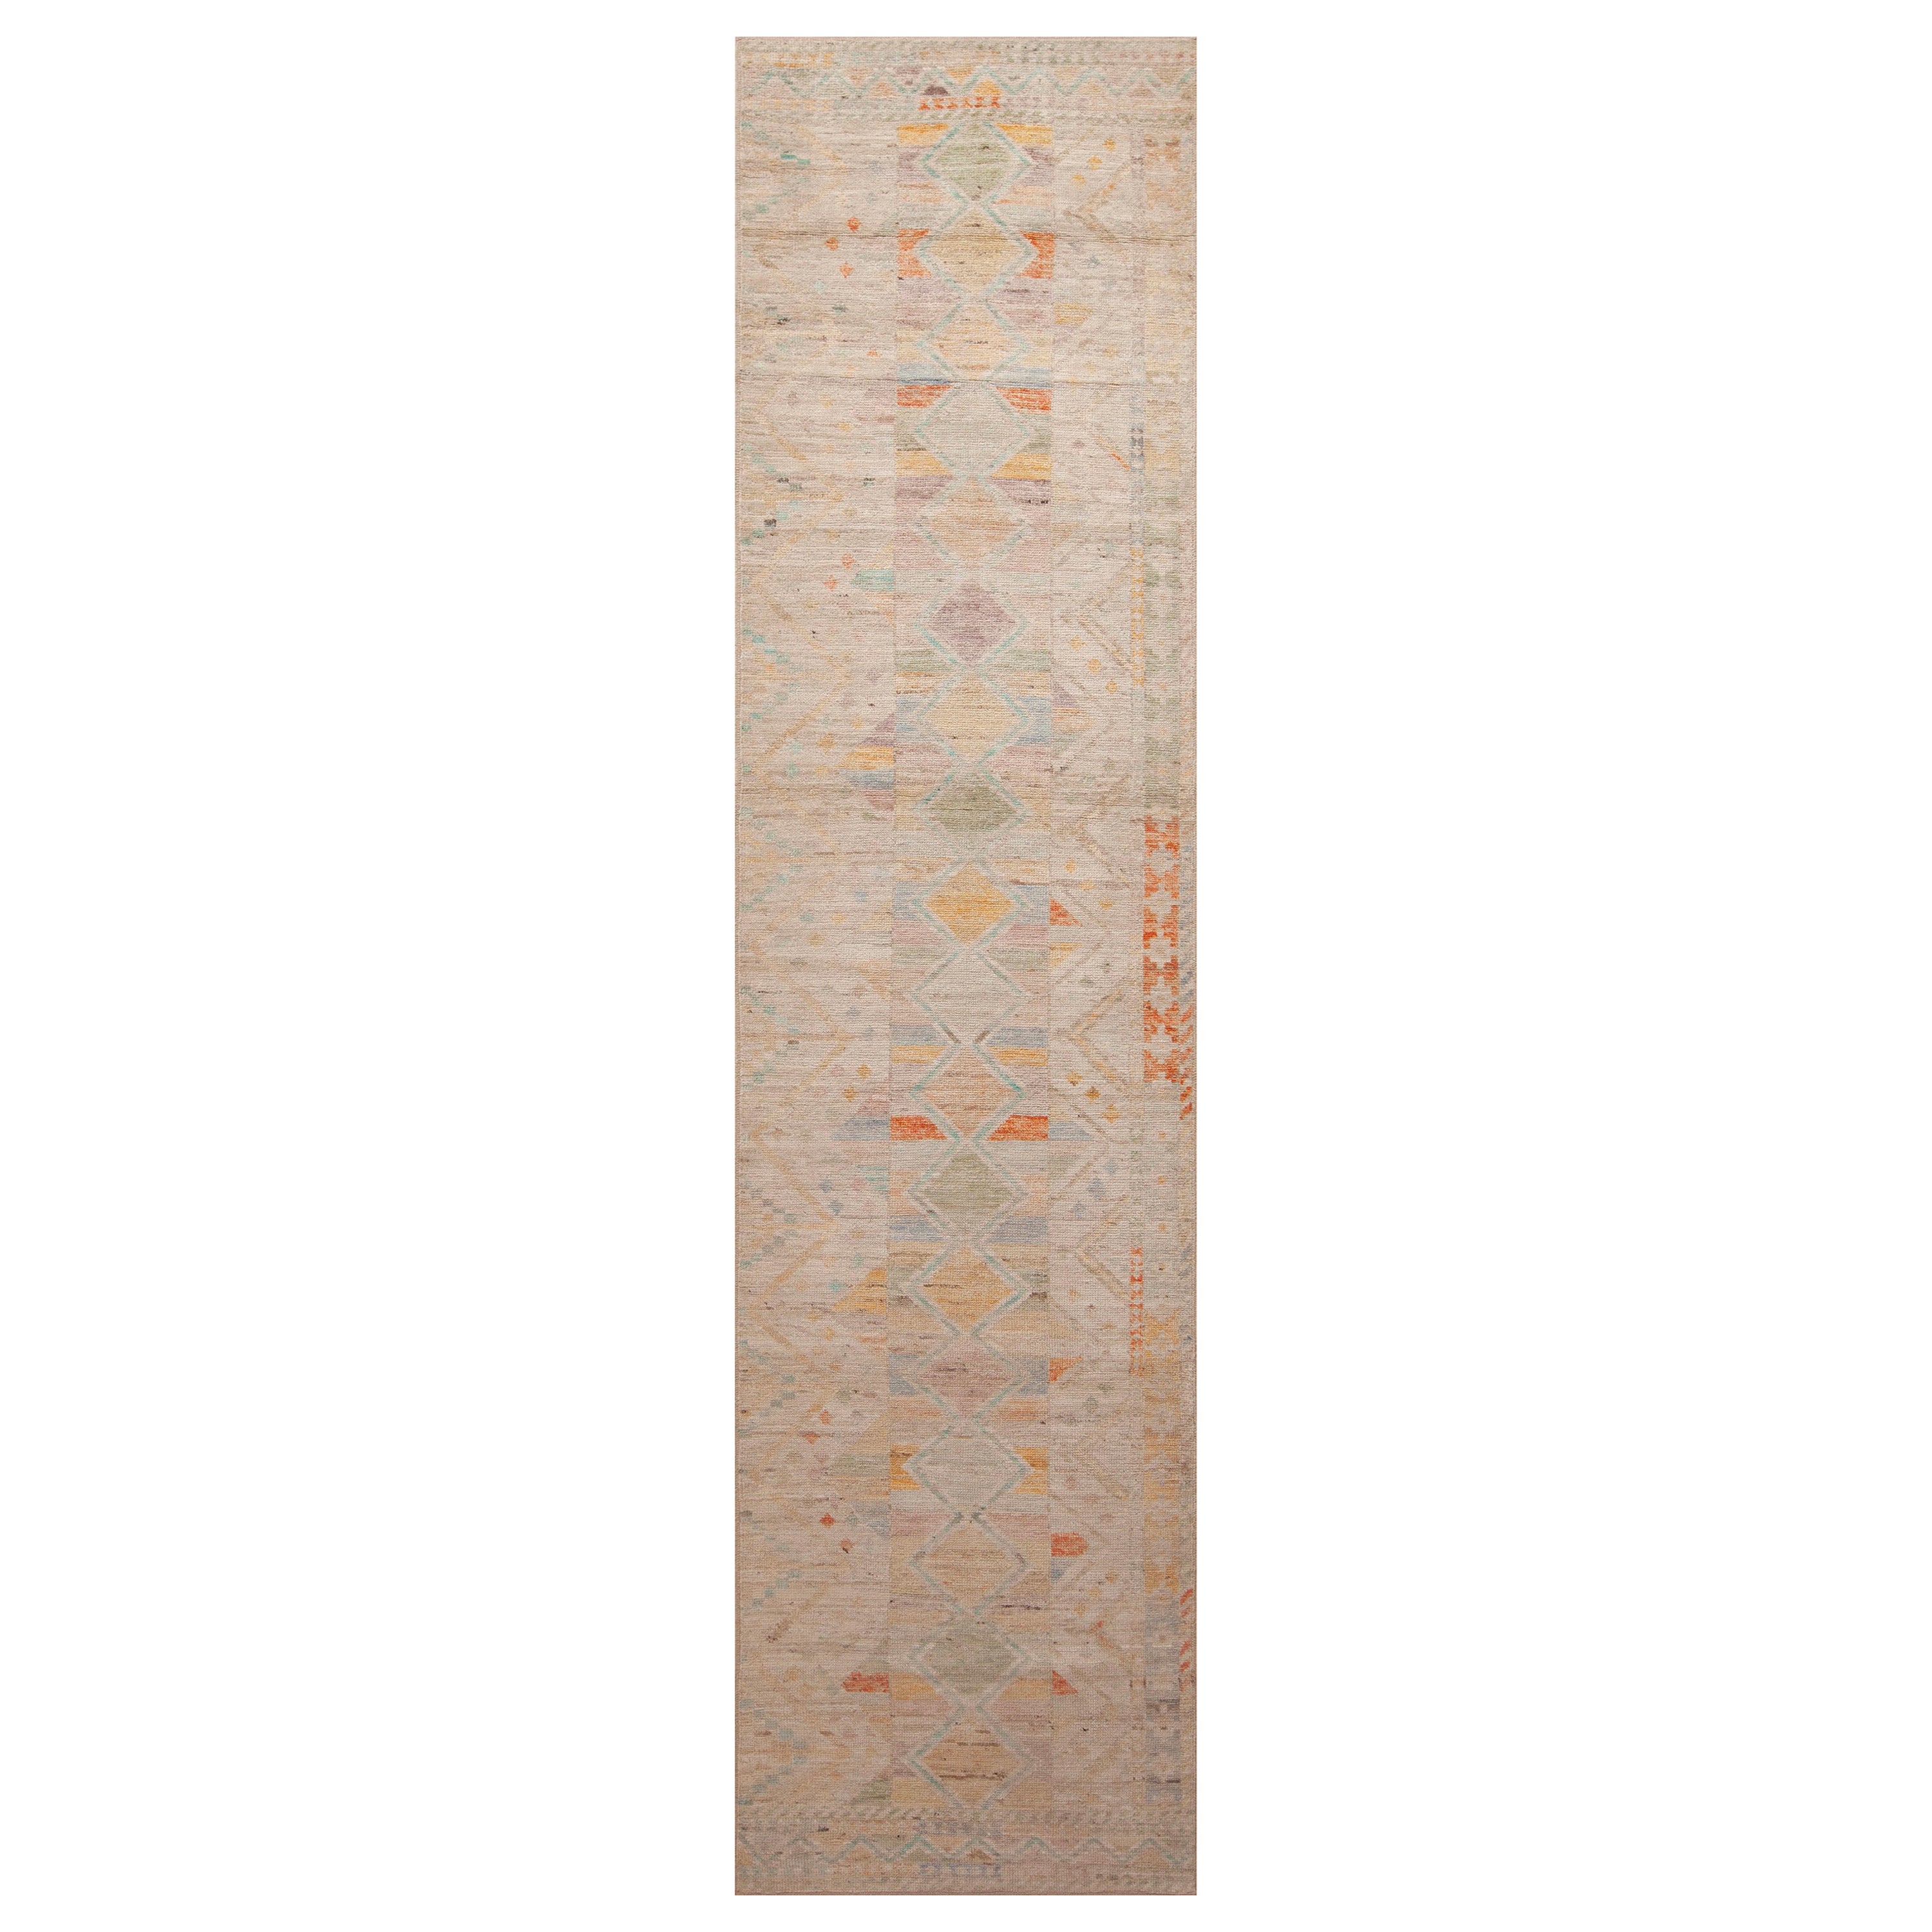 Nazmiyal Collection Tribal Geometric Design Modern Hallway Runner Rug 3' x 13' For Sale